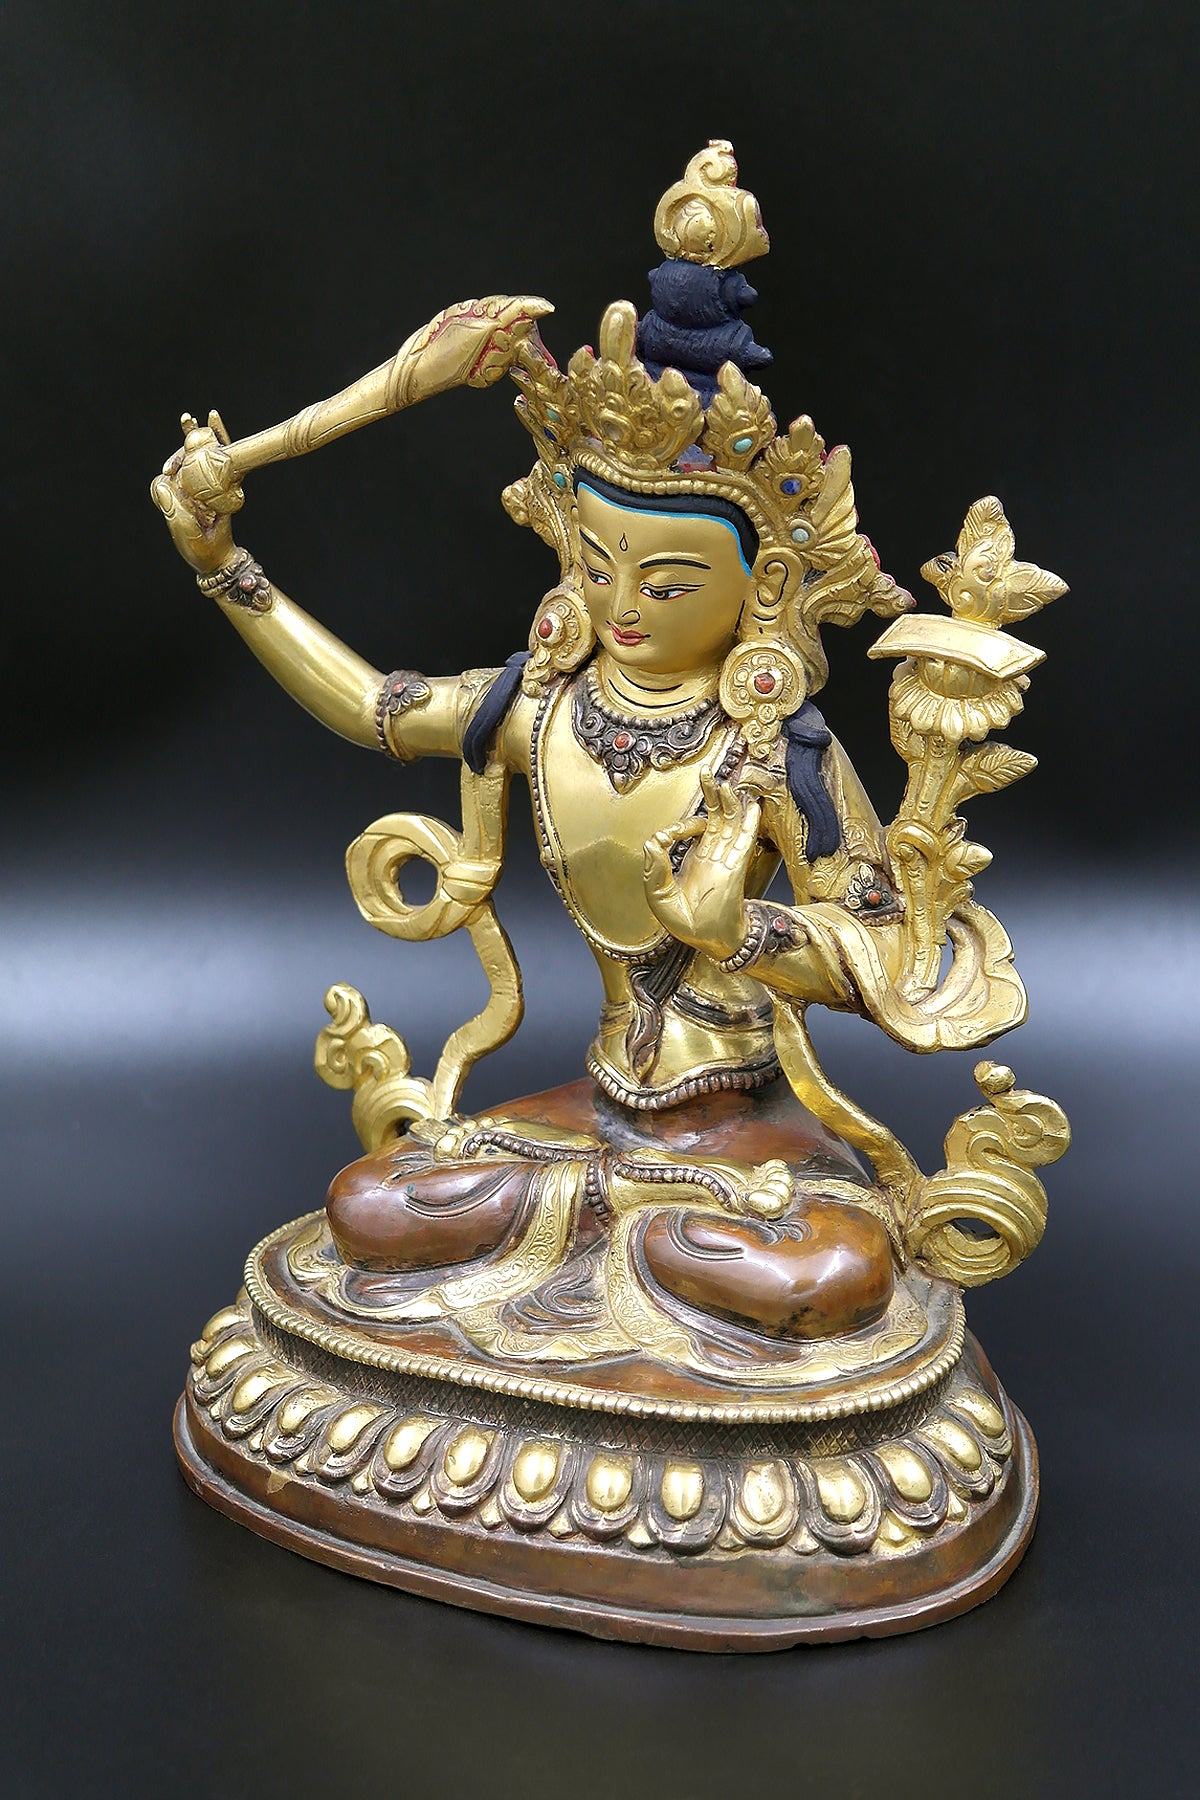 Partly Gold Plated Tibetan Buddhist Manjushree Statue from Nepal 9"